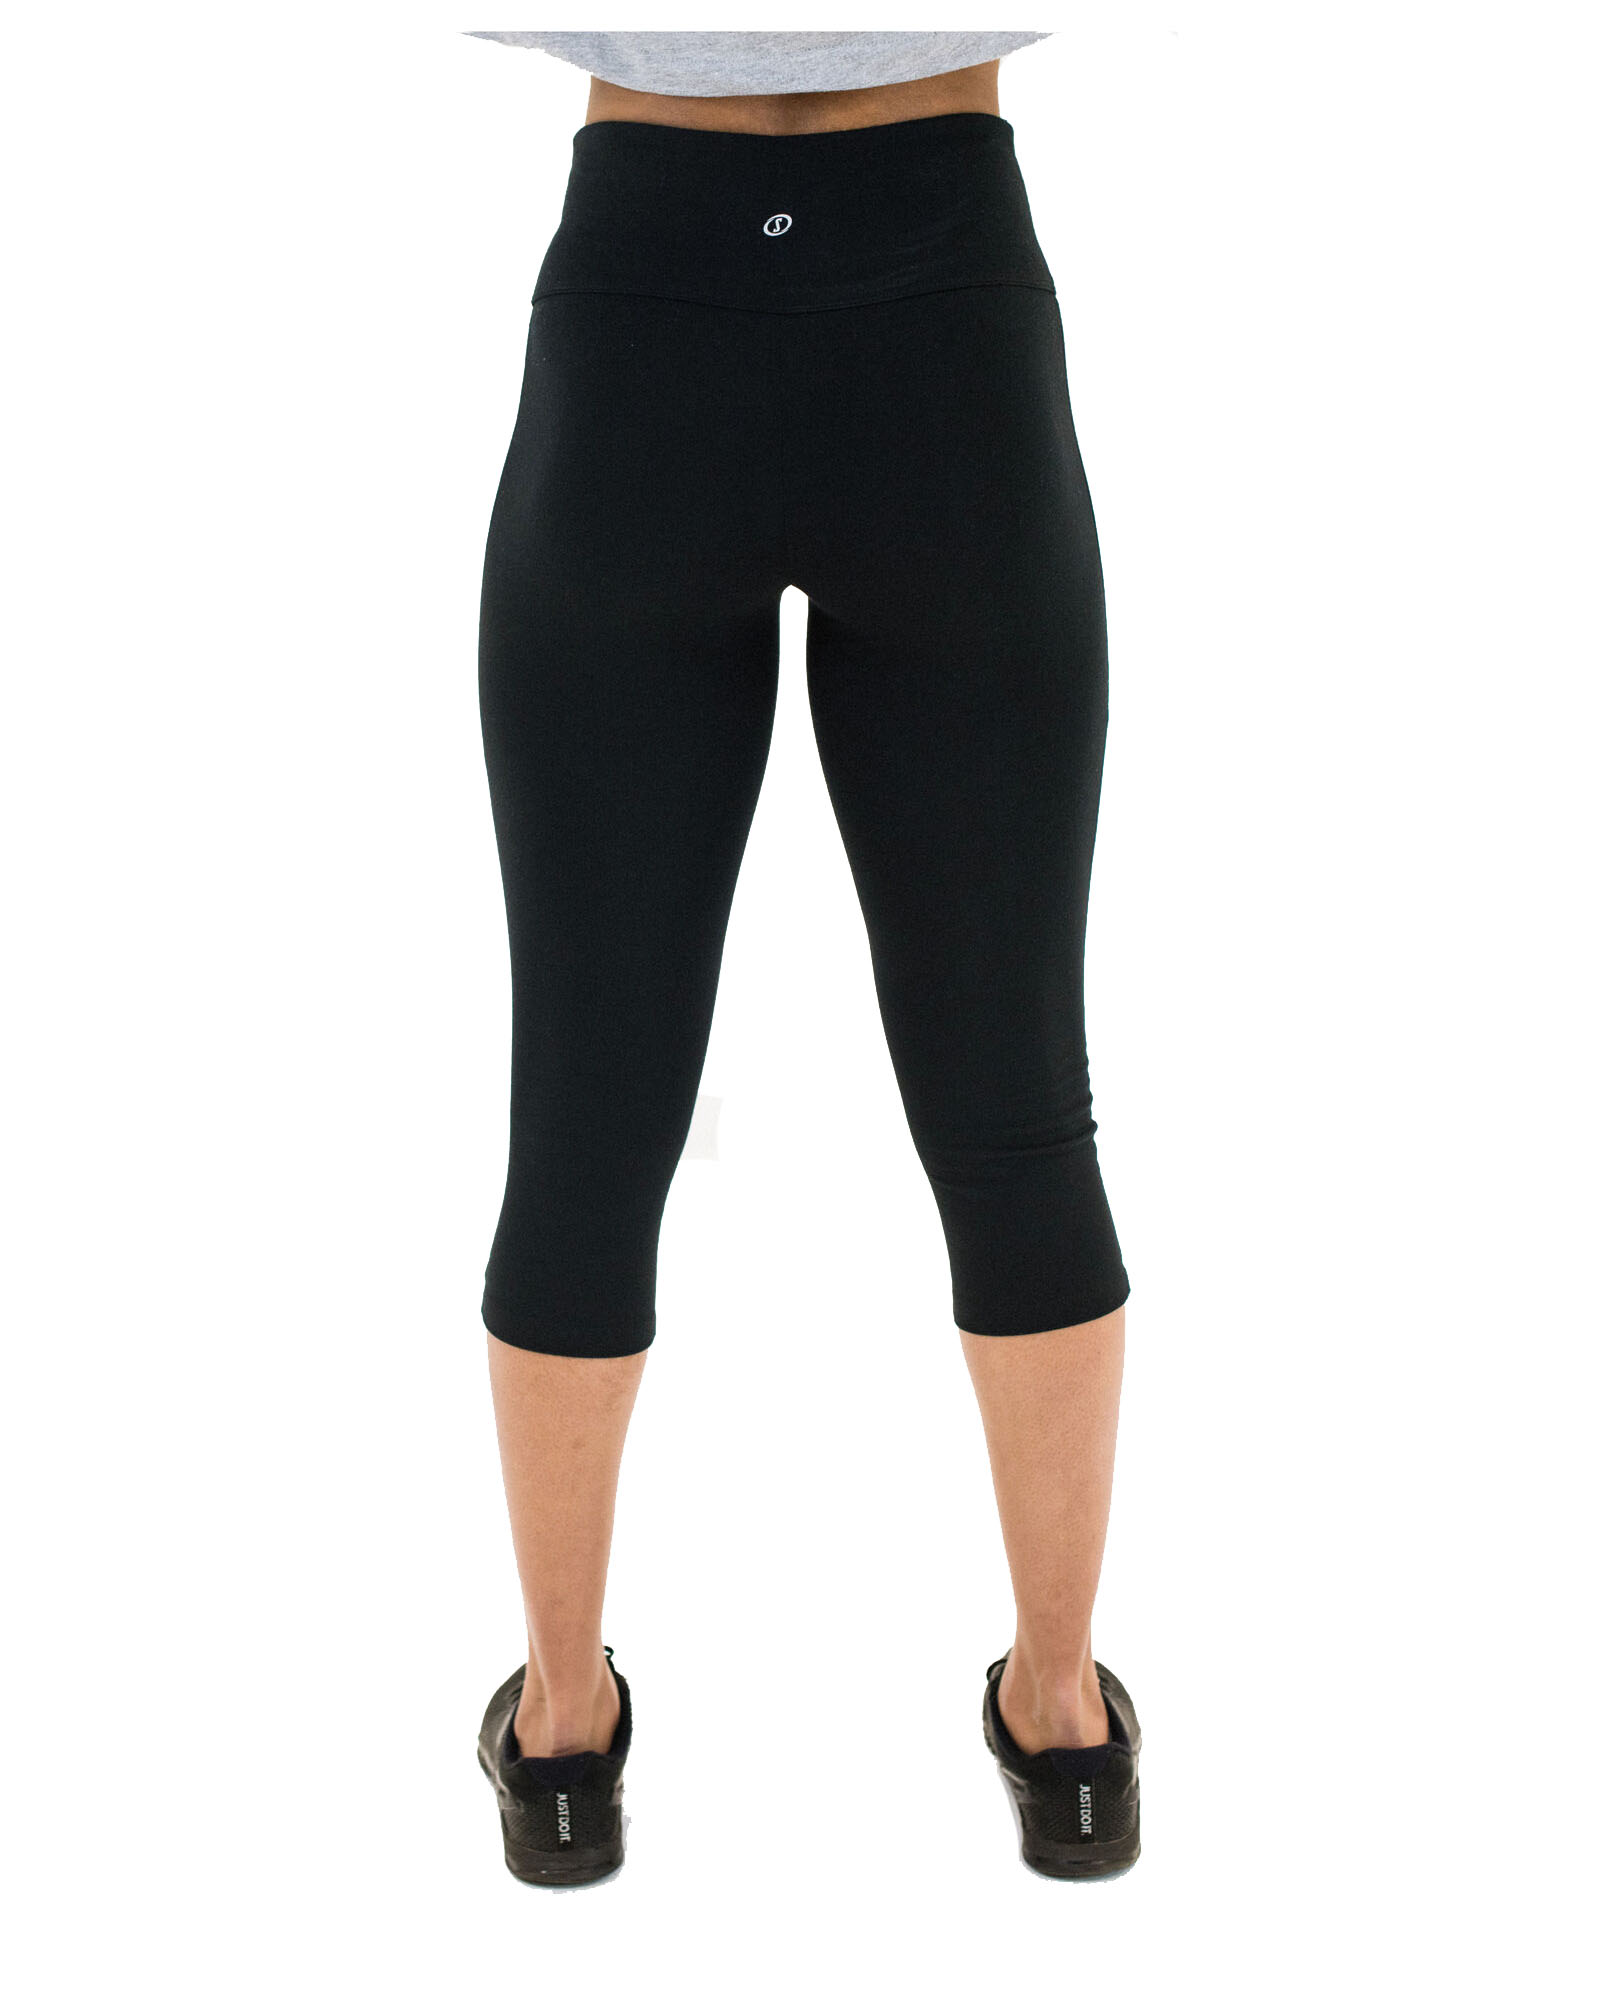 Spalding Women's High Waisted Essential Capri Legging Black L mujer leggins  for sale online